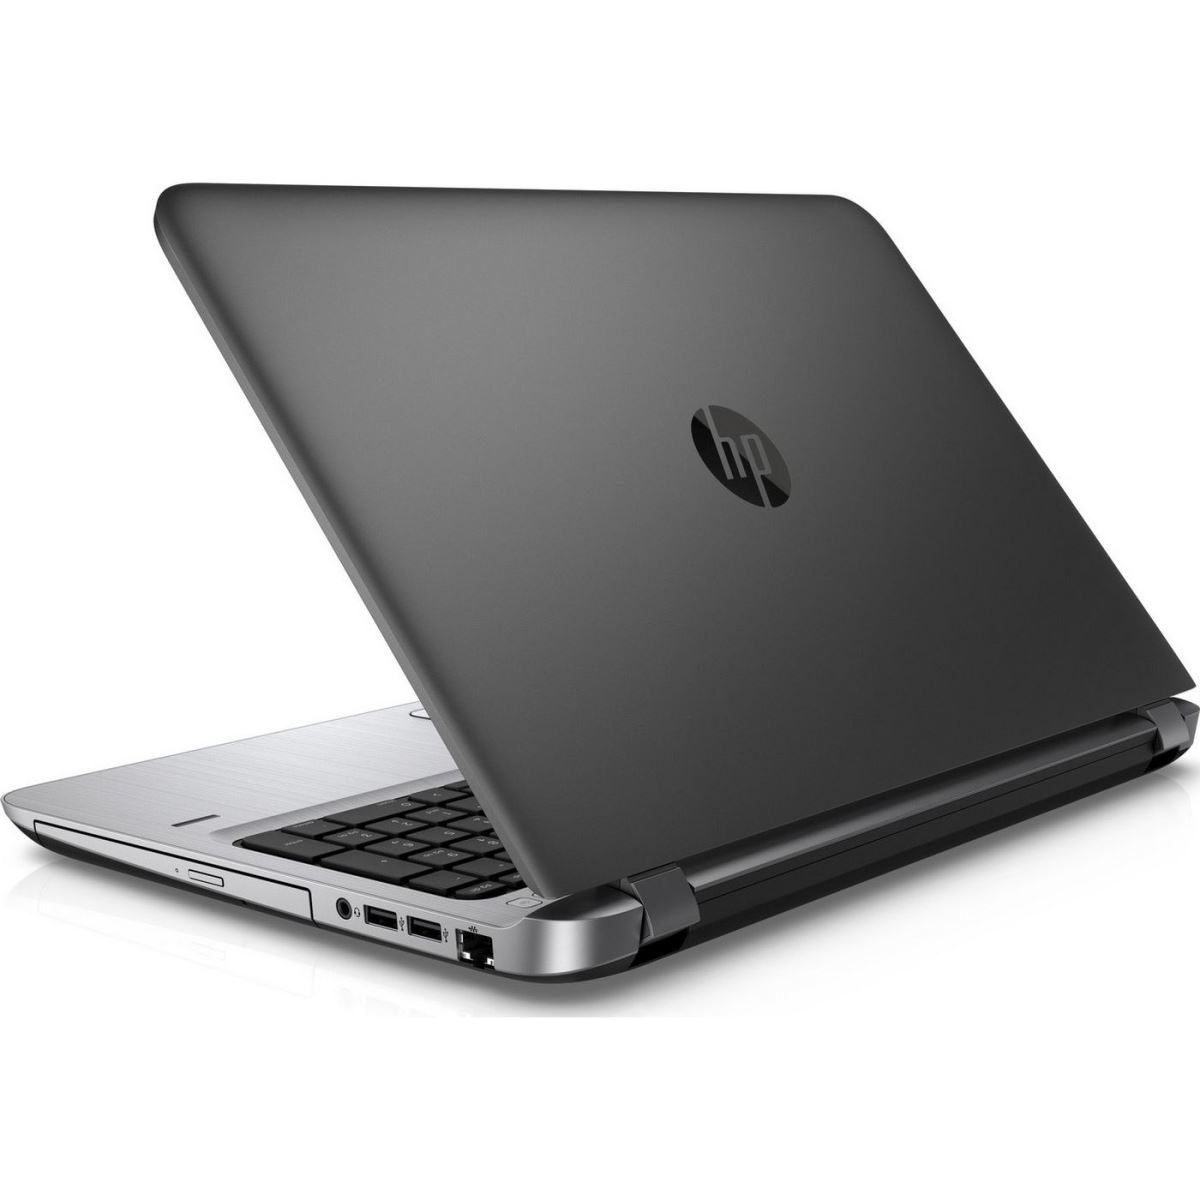 Laptop HP ProBook 450 G3, 15.6 inch, Intel Core i3-6100U, RAM 4GB, HDD